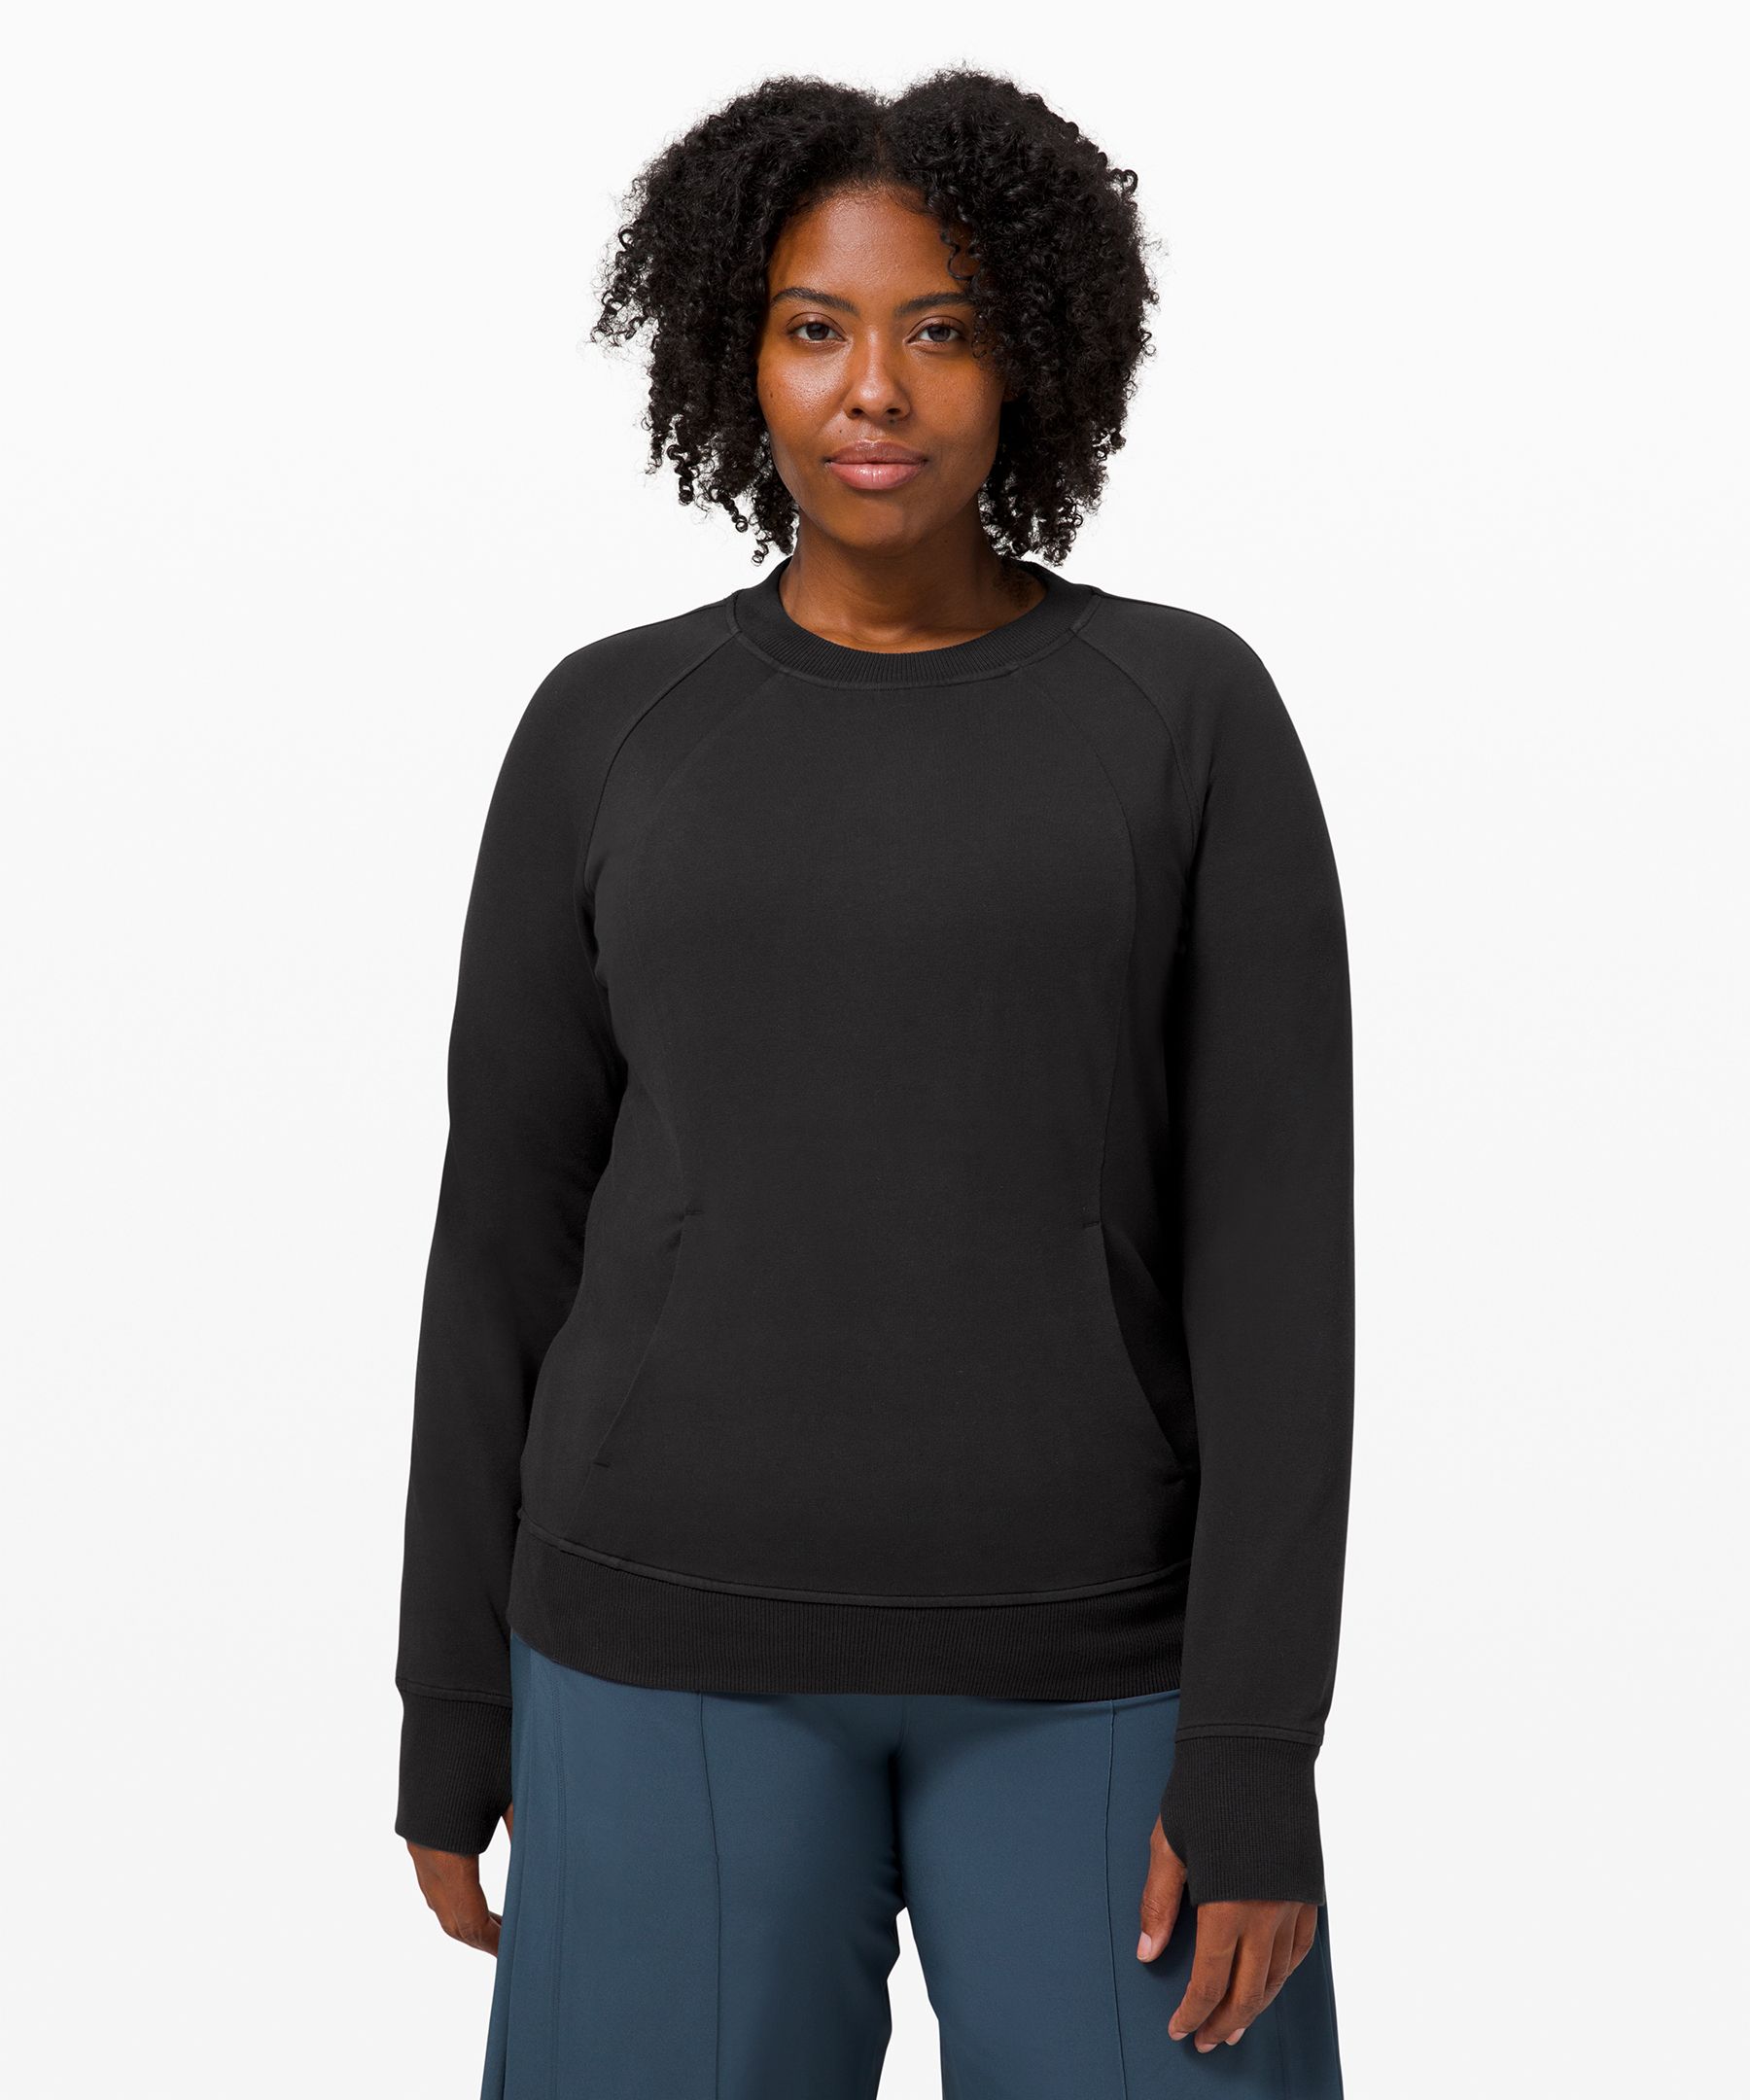 Sweatshirt Crewneck By Lululemon Size: 12